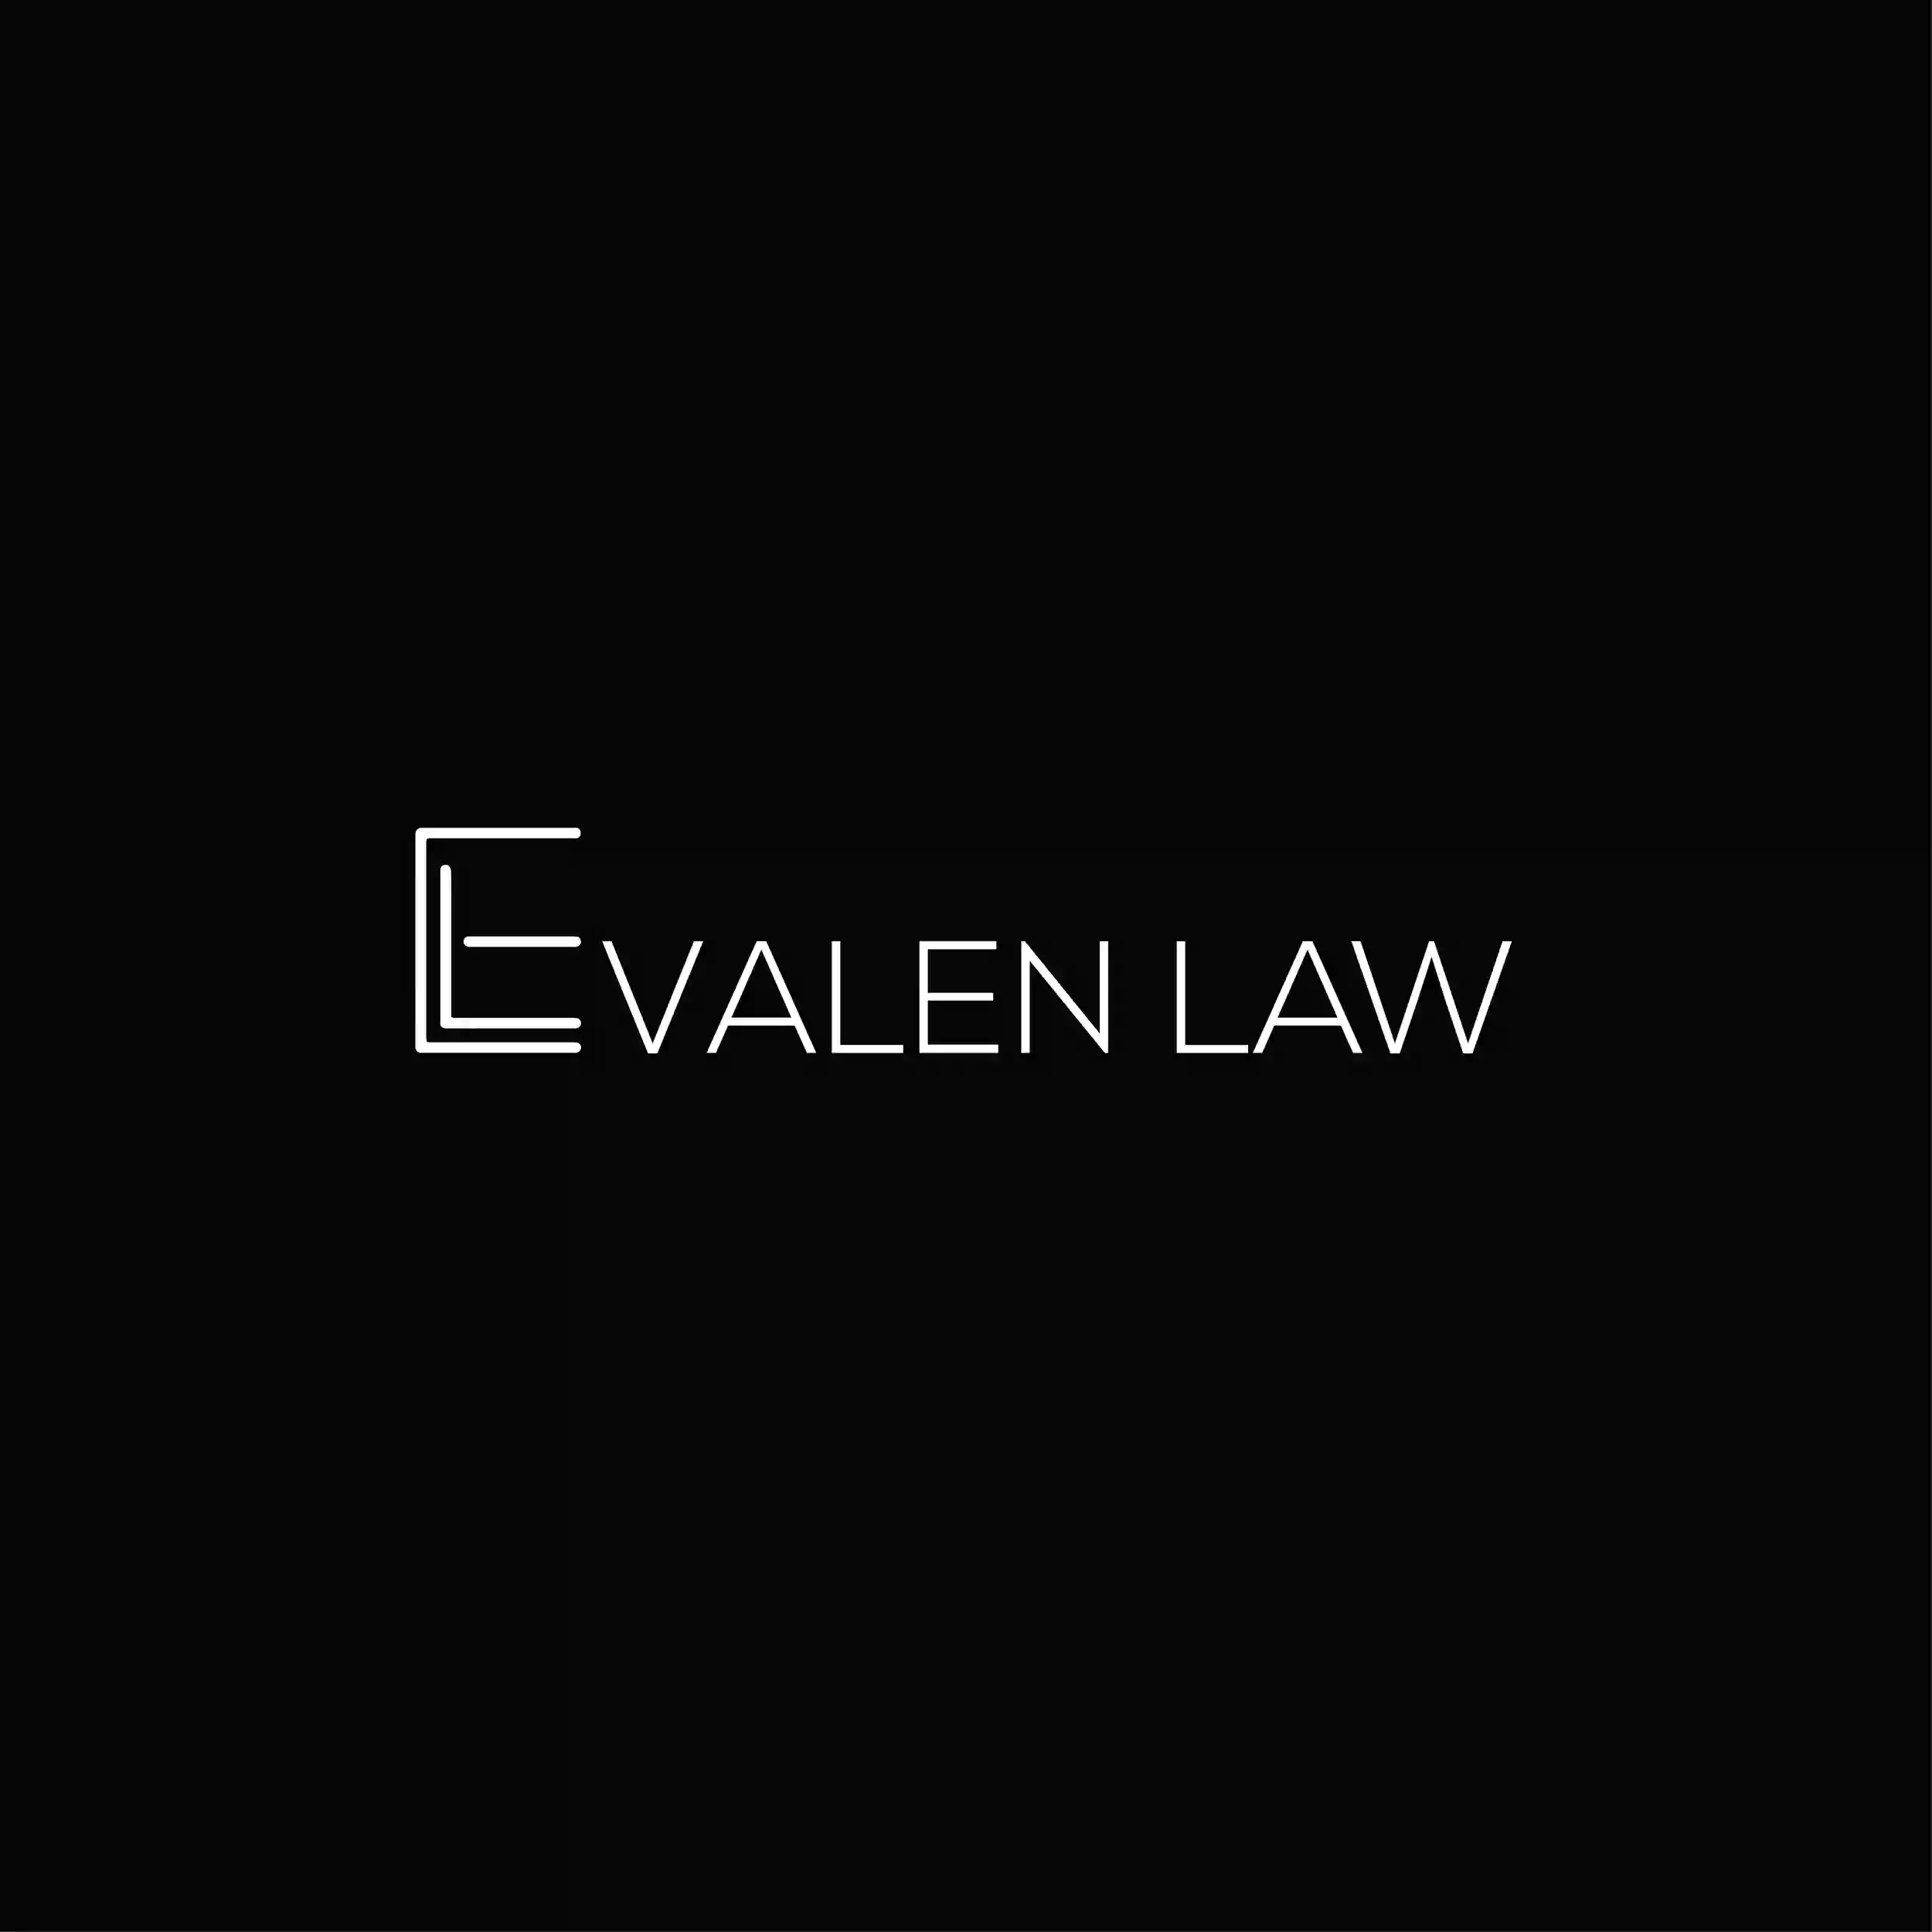 Evalen Law